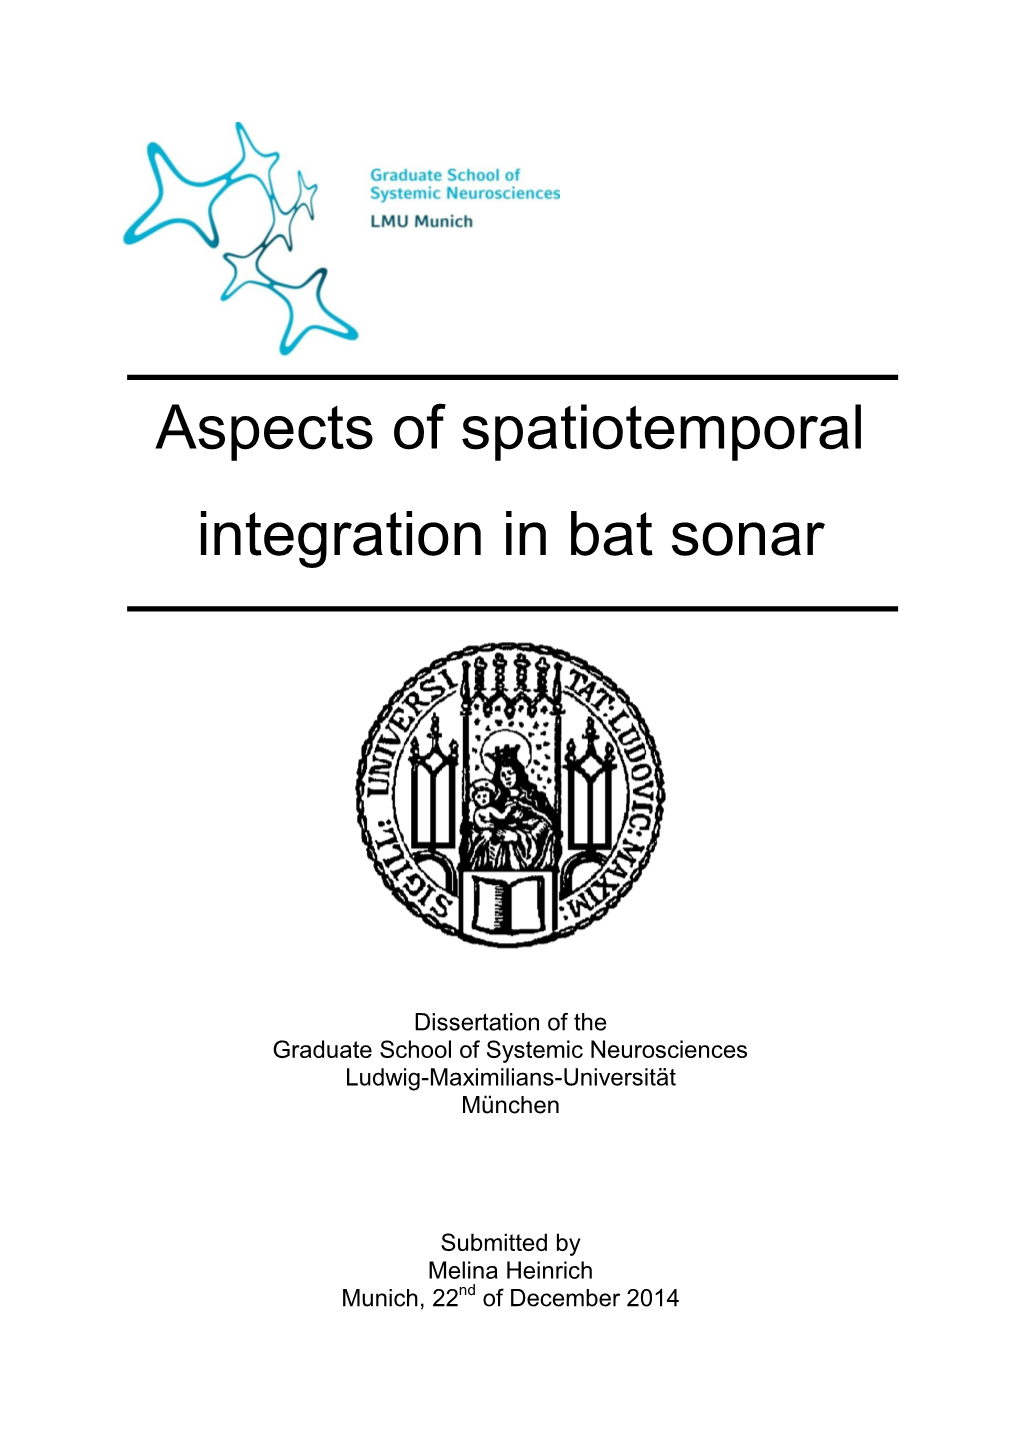 Aspects of Spatiotemporal Integration in Bat Sonar